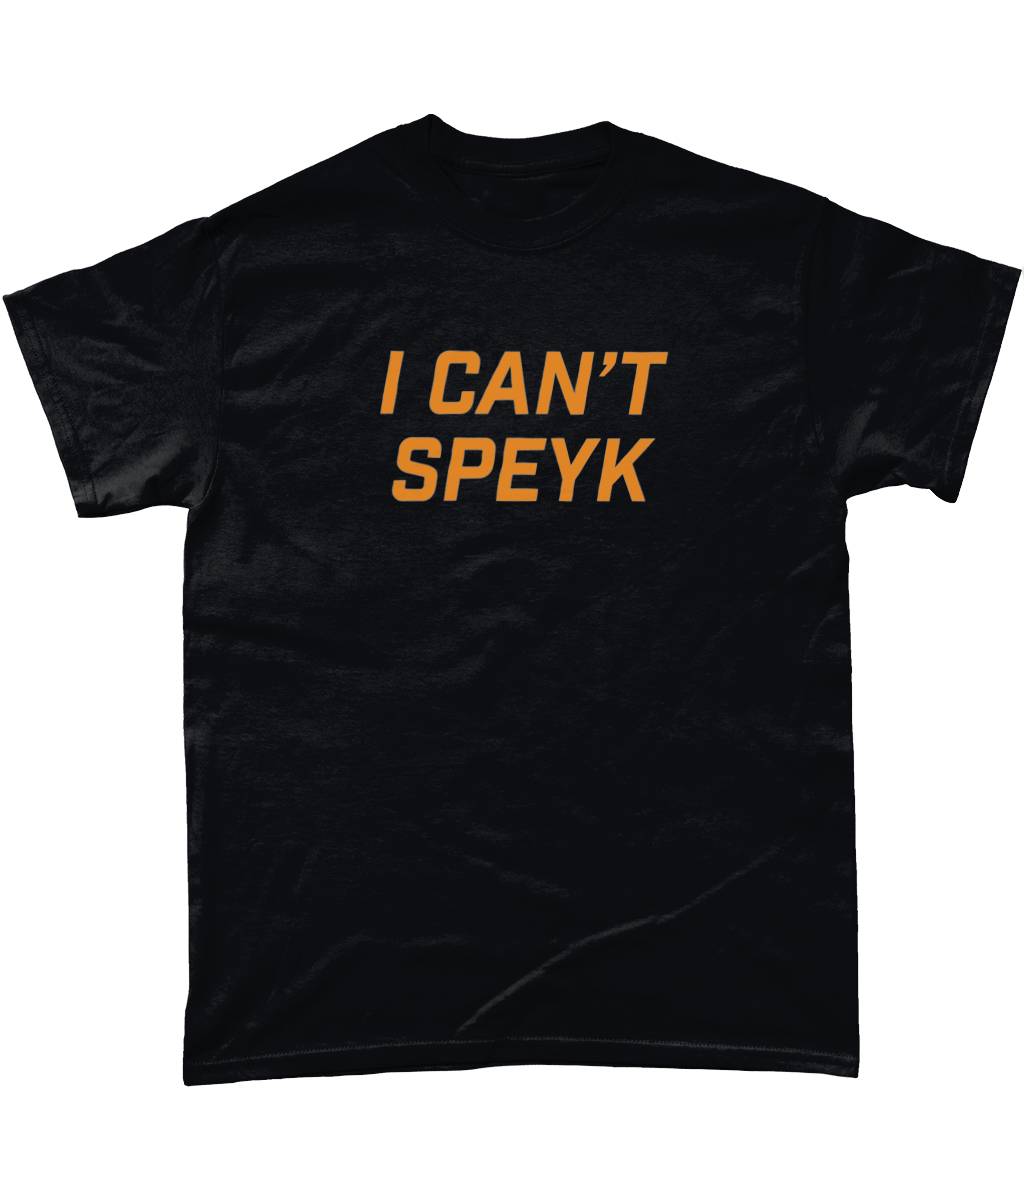 I Can't Speyk Slogan T-Shirt in Black